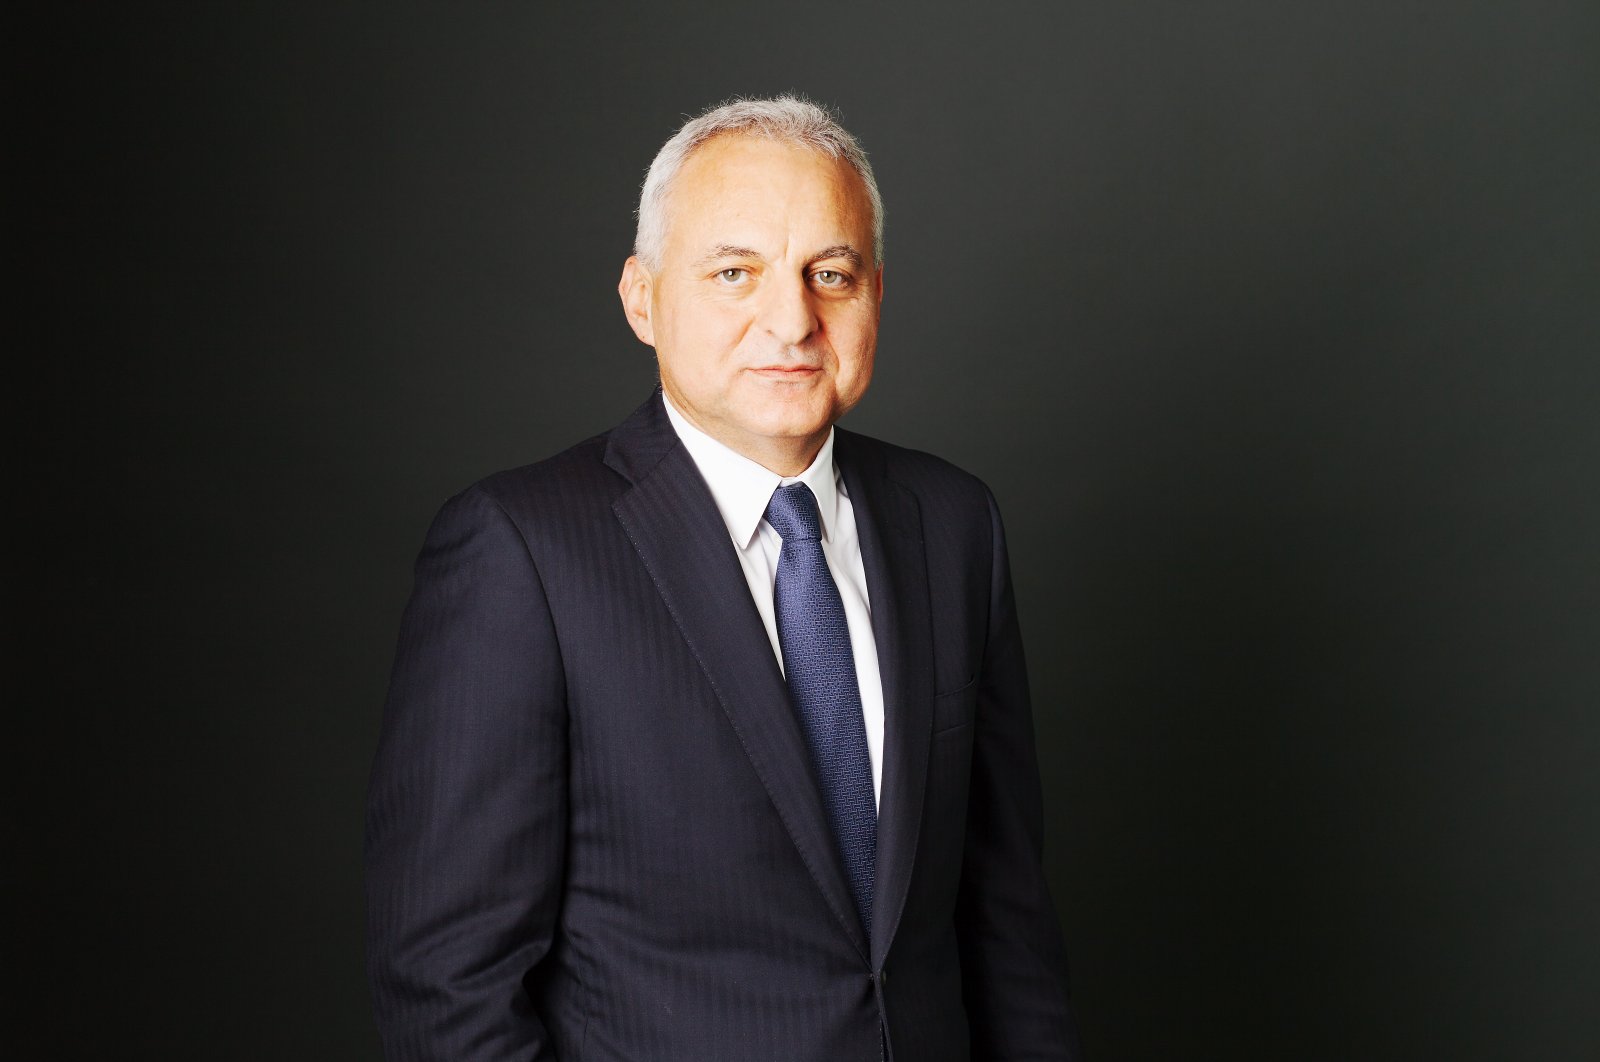 Rolls-Royce's new CEO Tufan Erginbilgiç. (Courtesy of Rolls-Royce)